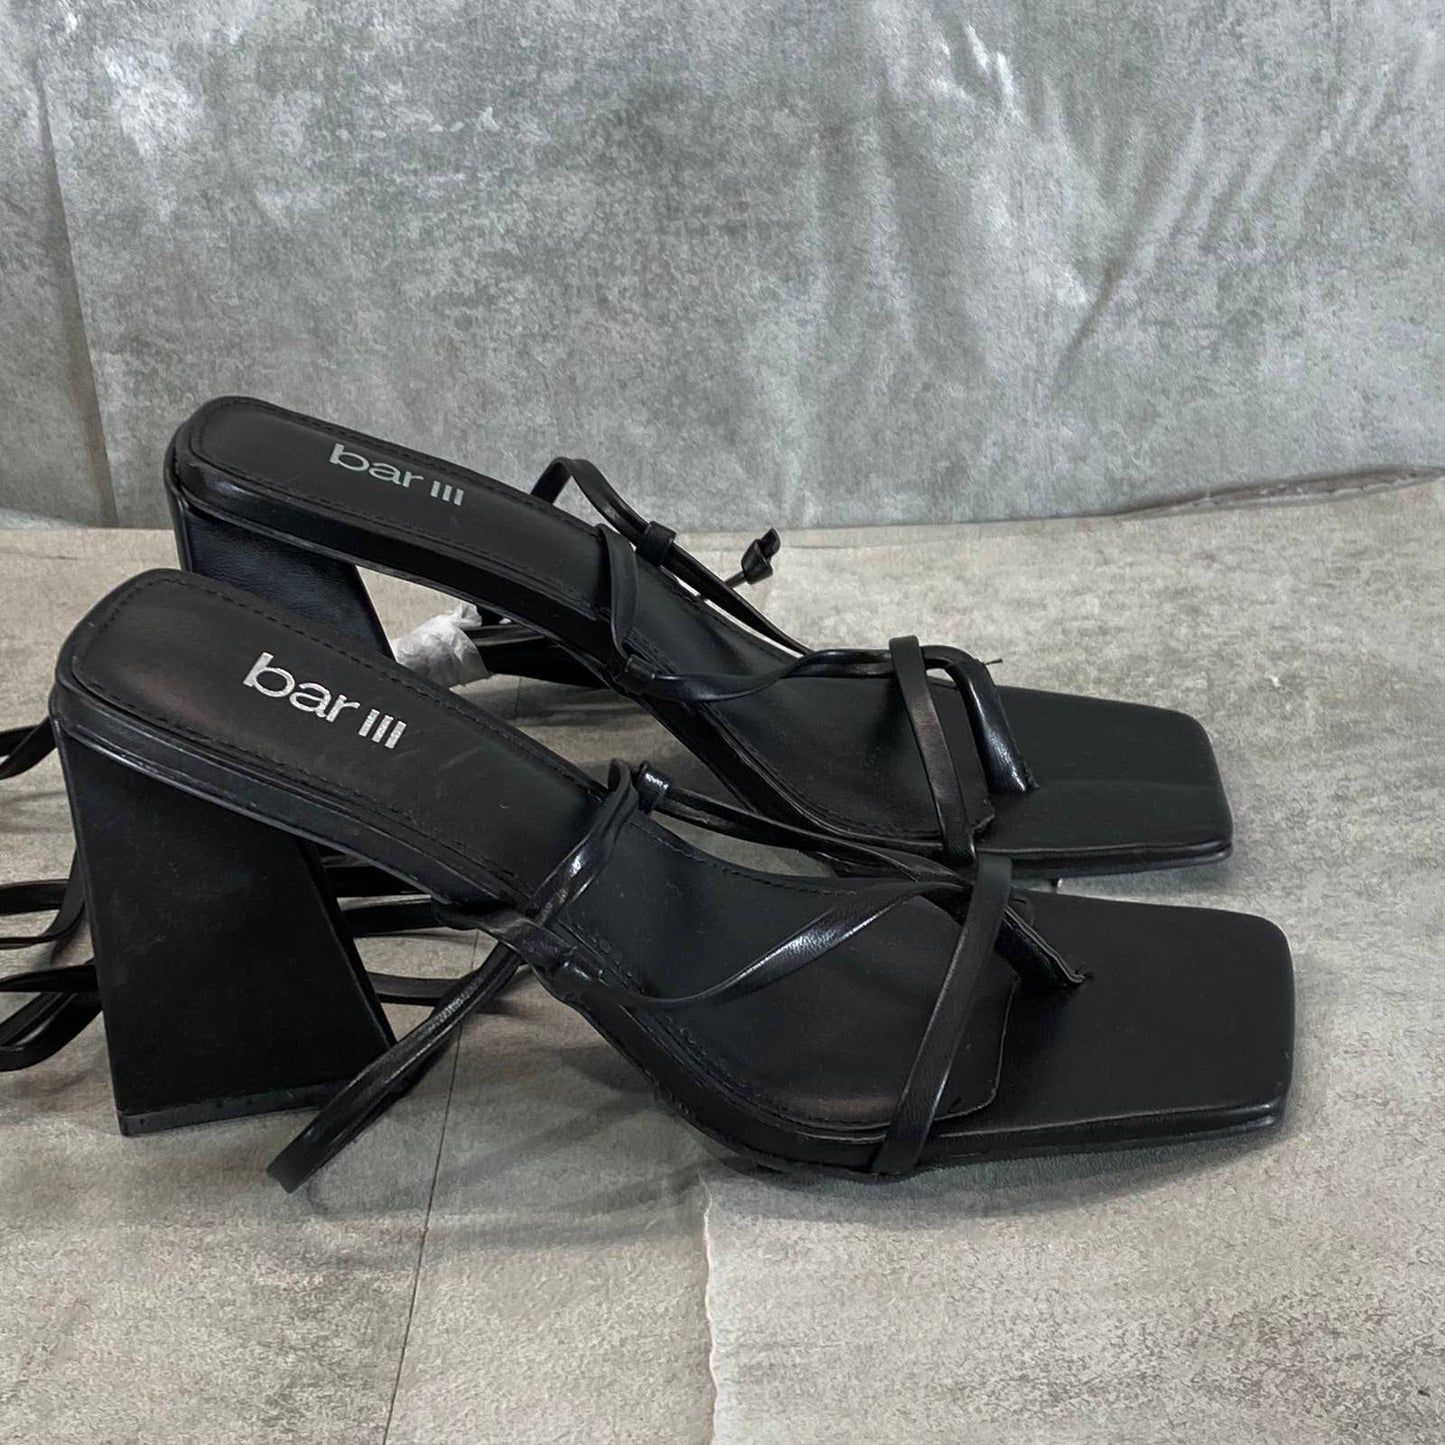 BAR III Women's Black Smooth Alana Tie-Up Geo-Heel Square-Toe Sandals SZ 8